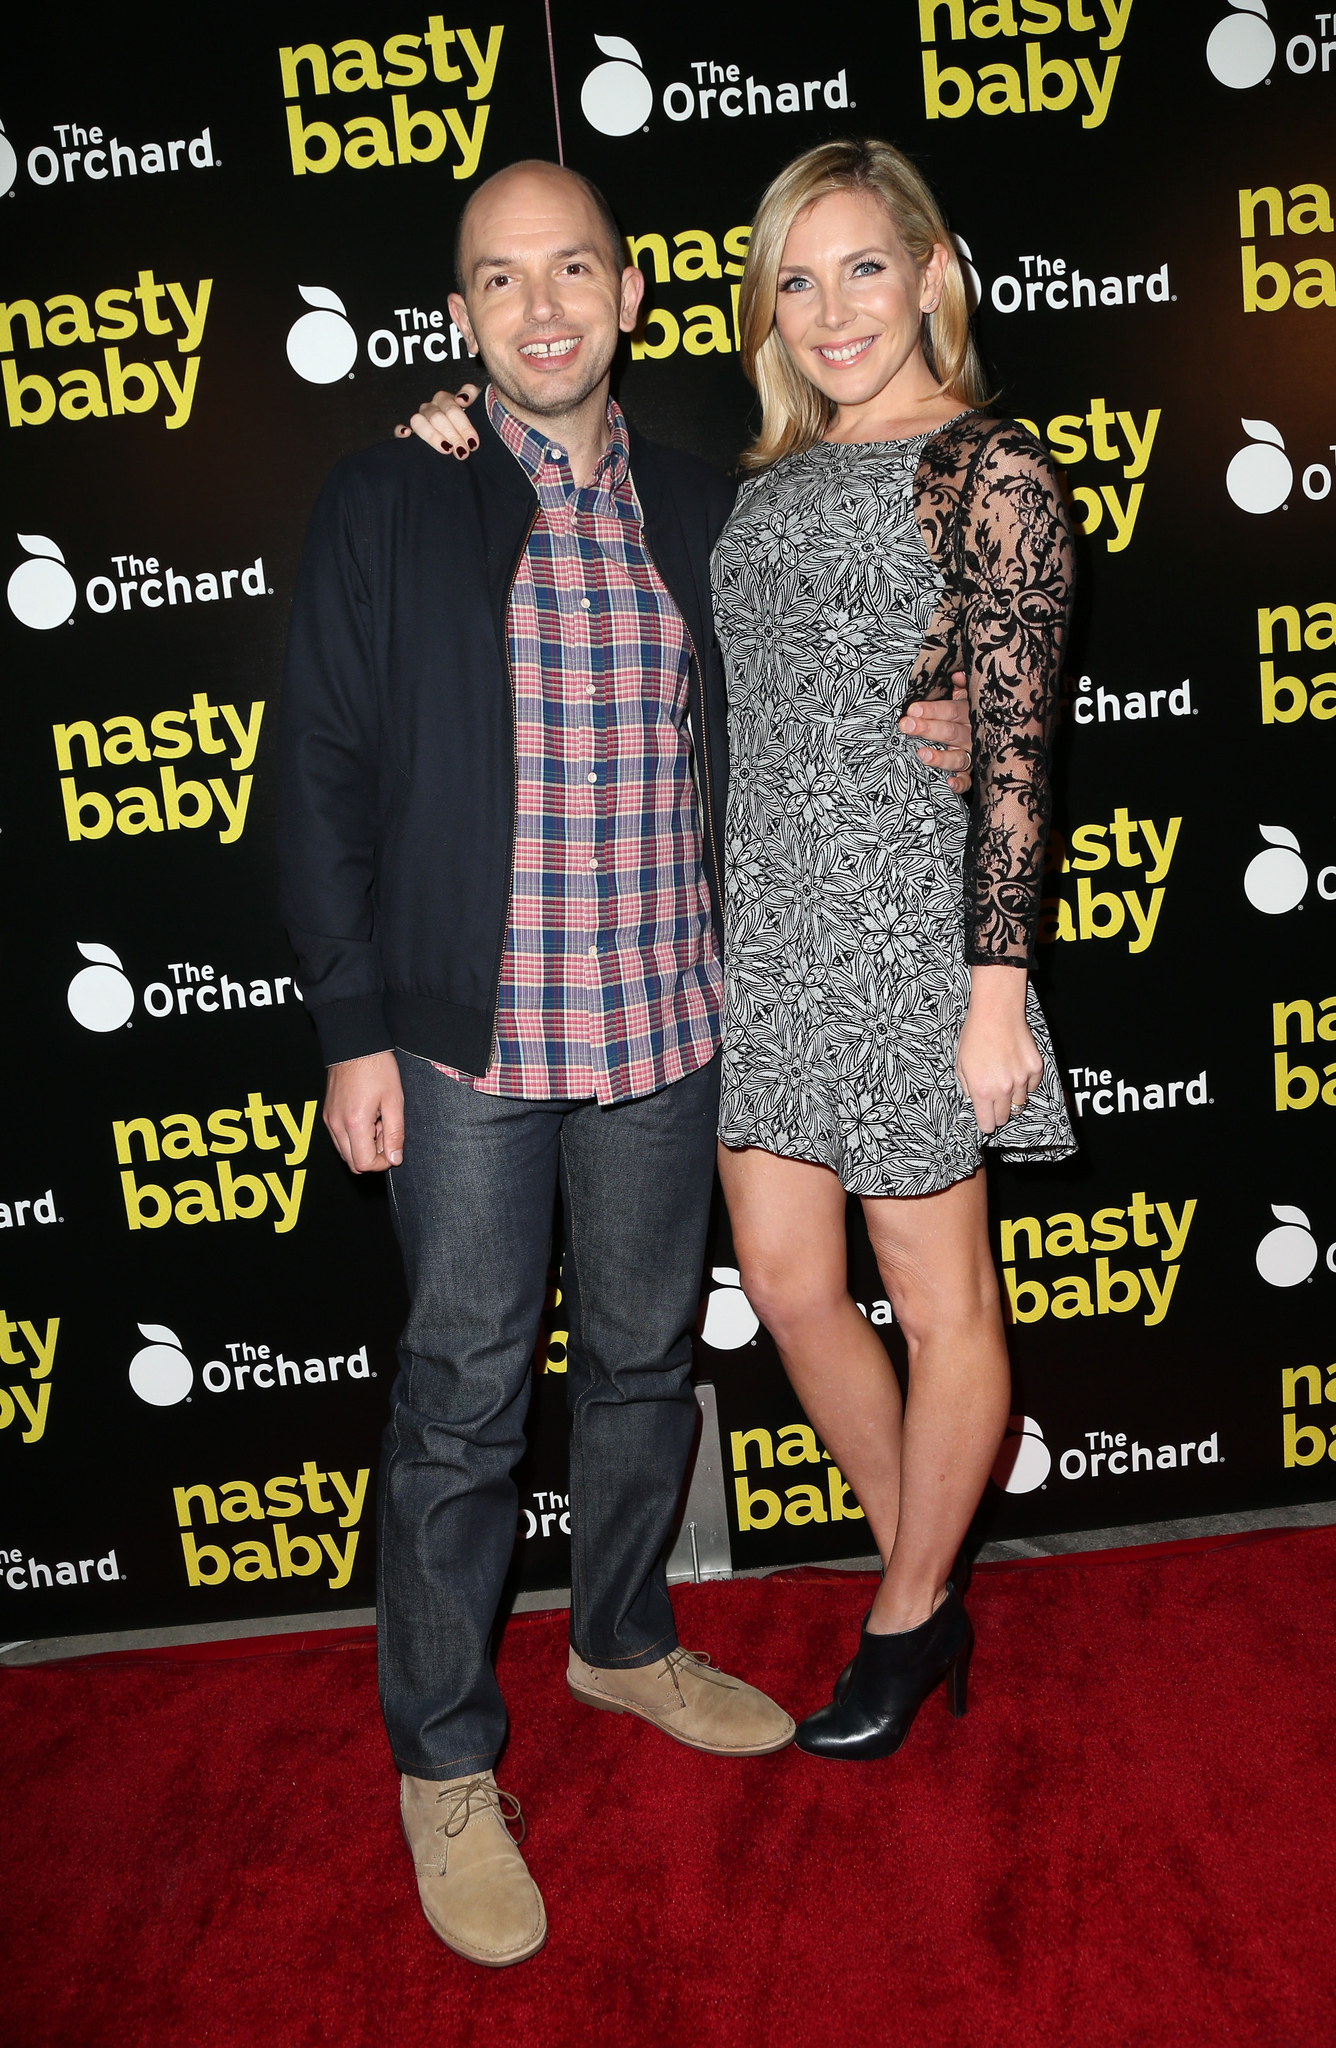 Paul Scheer and June Diane Raphael at event of Nasty Baby (2015)